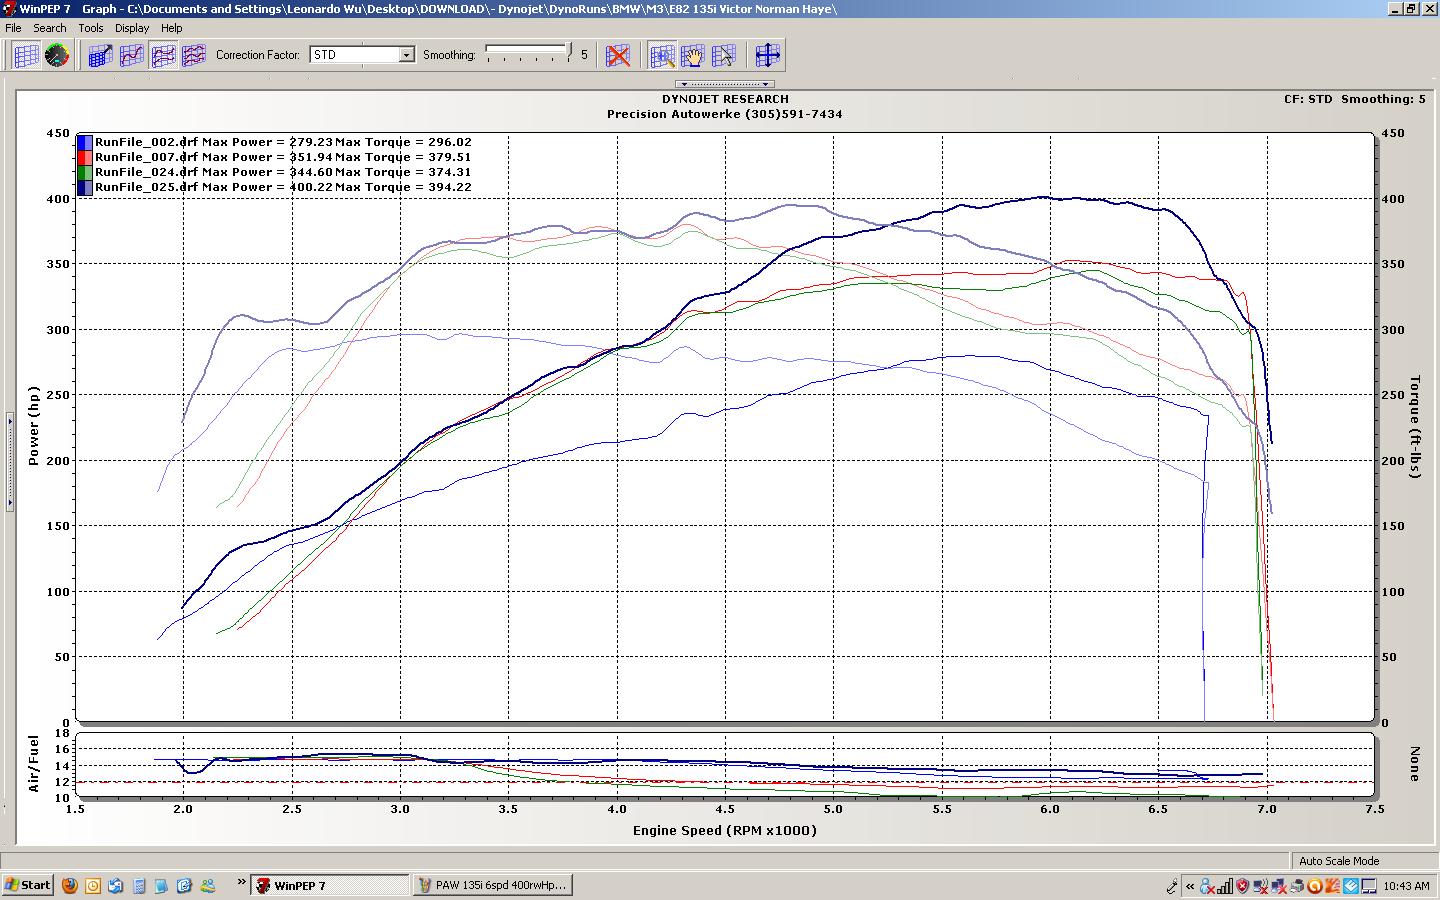 2008  BMW 135i 6spd - Precision Autowerke 400rwHP on 93octane Dyno Graph